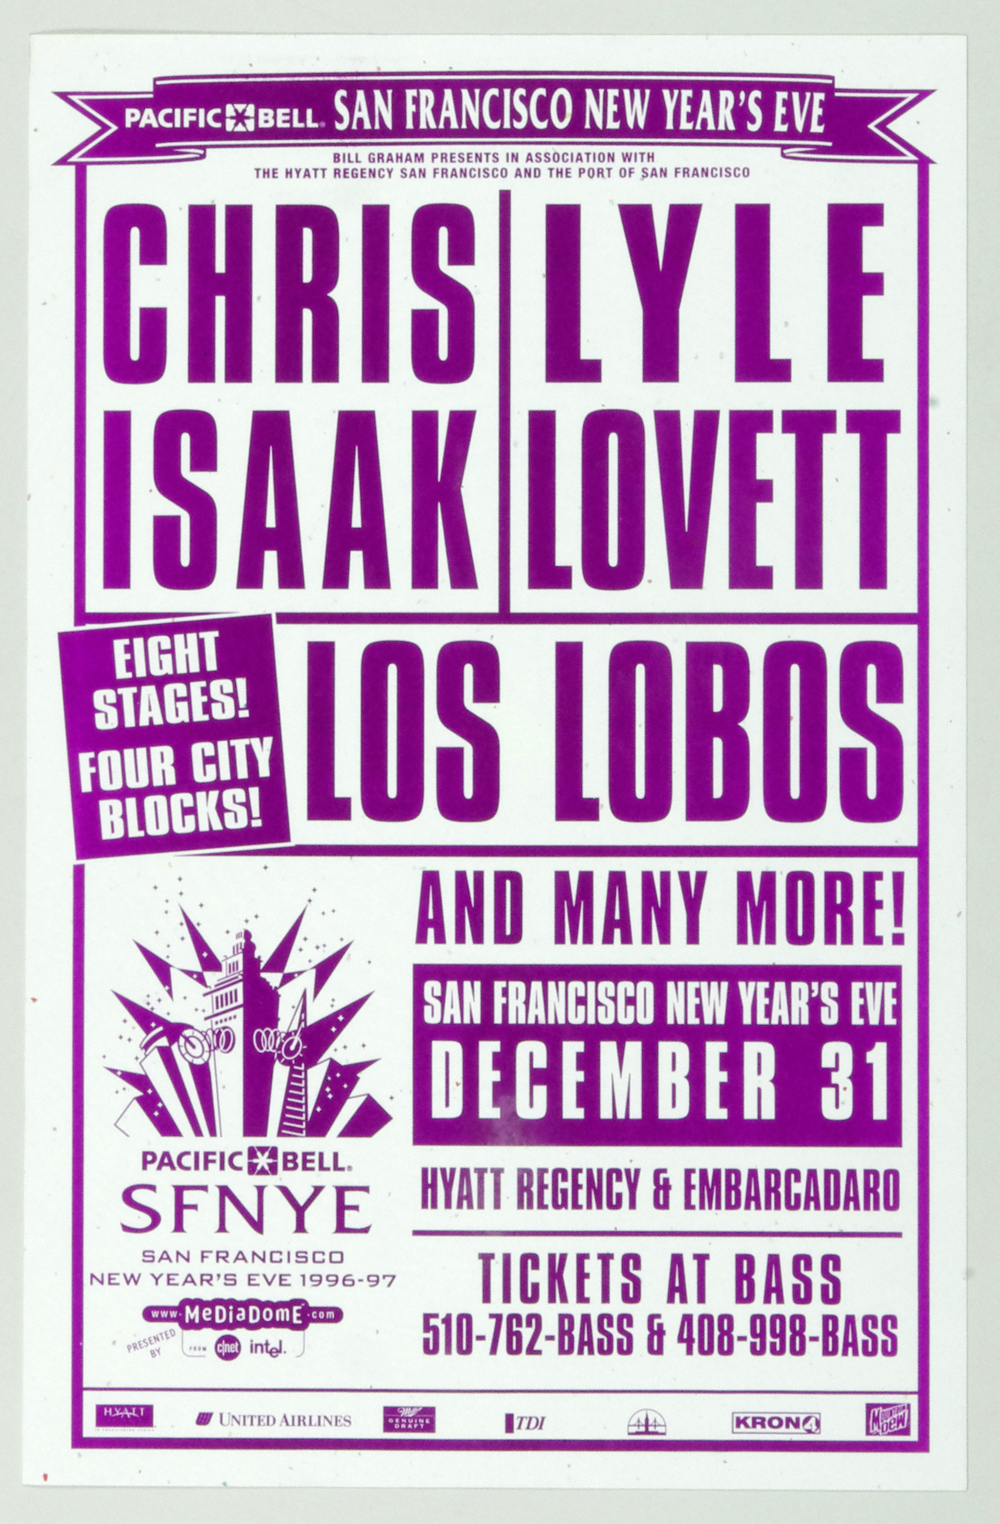 Chris Isaak Lyle Lovett Los Lobos Poster 1996 Dec 31 Embarcadero San Francisco